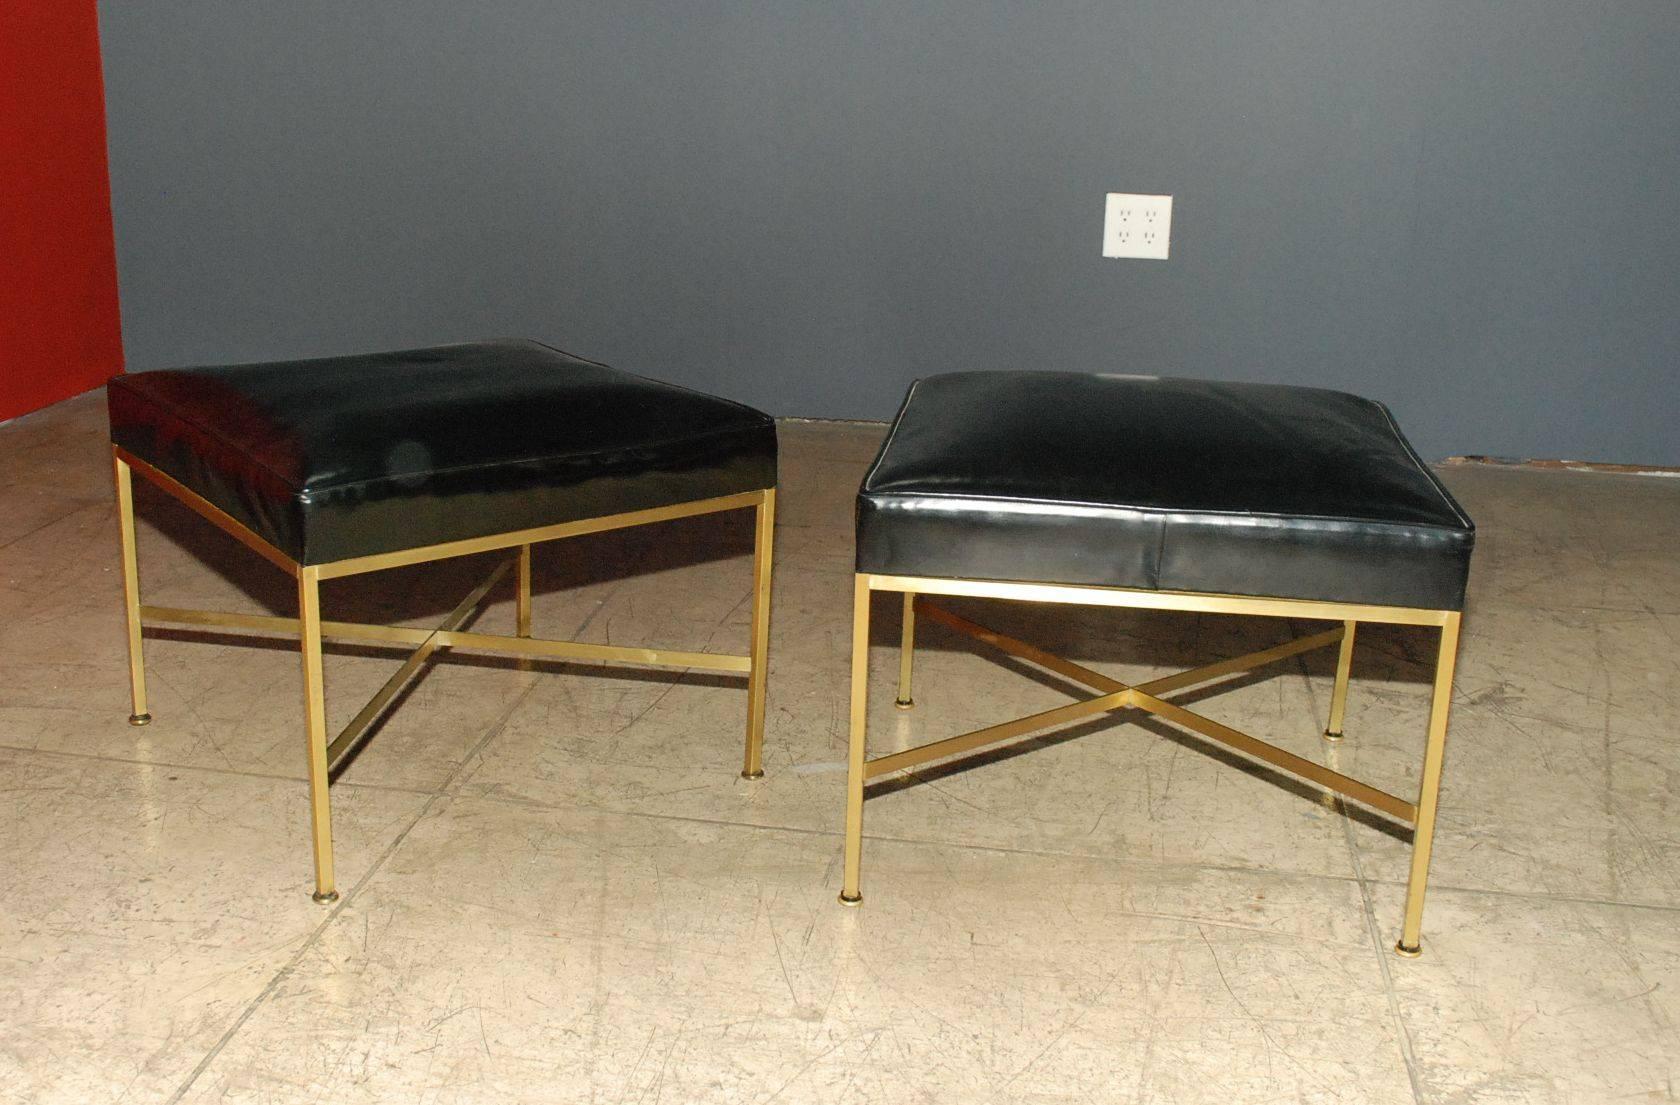 Pair of 1950s Paul McCobb X-base brass stools with original black vinyl upholstery.